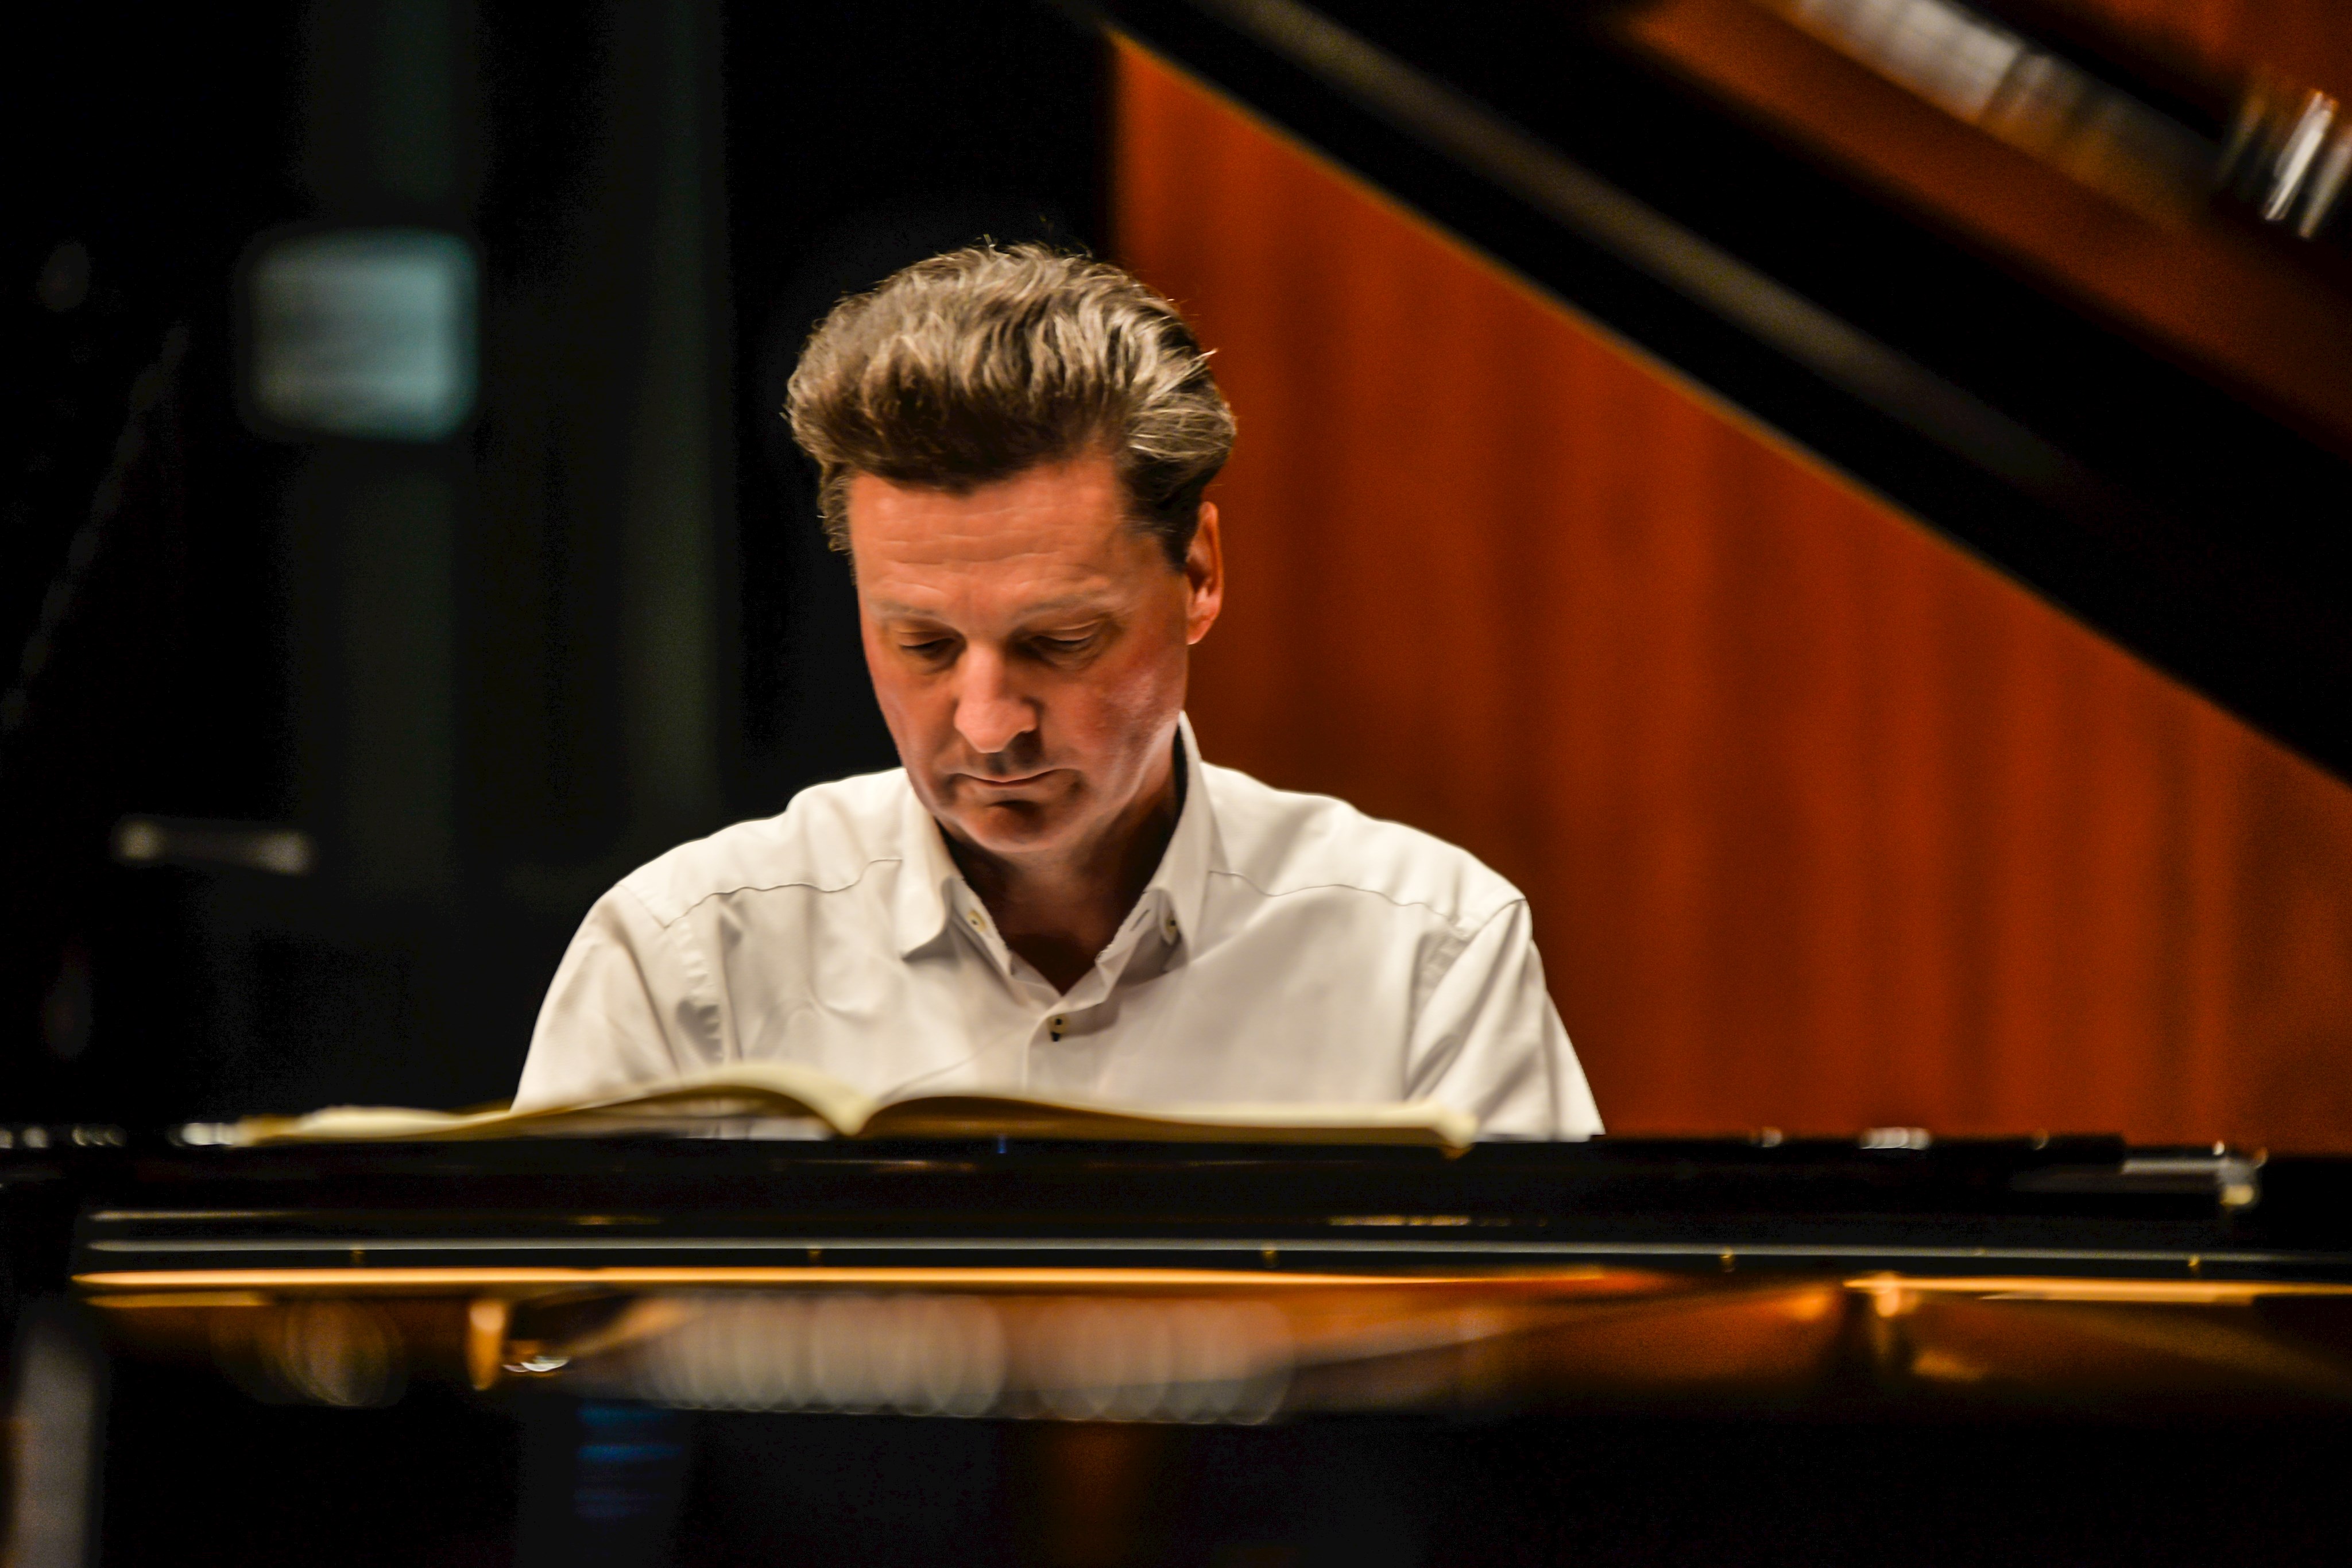 Pianist Christoph Soldan